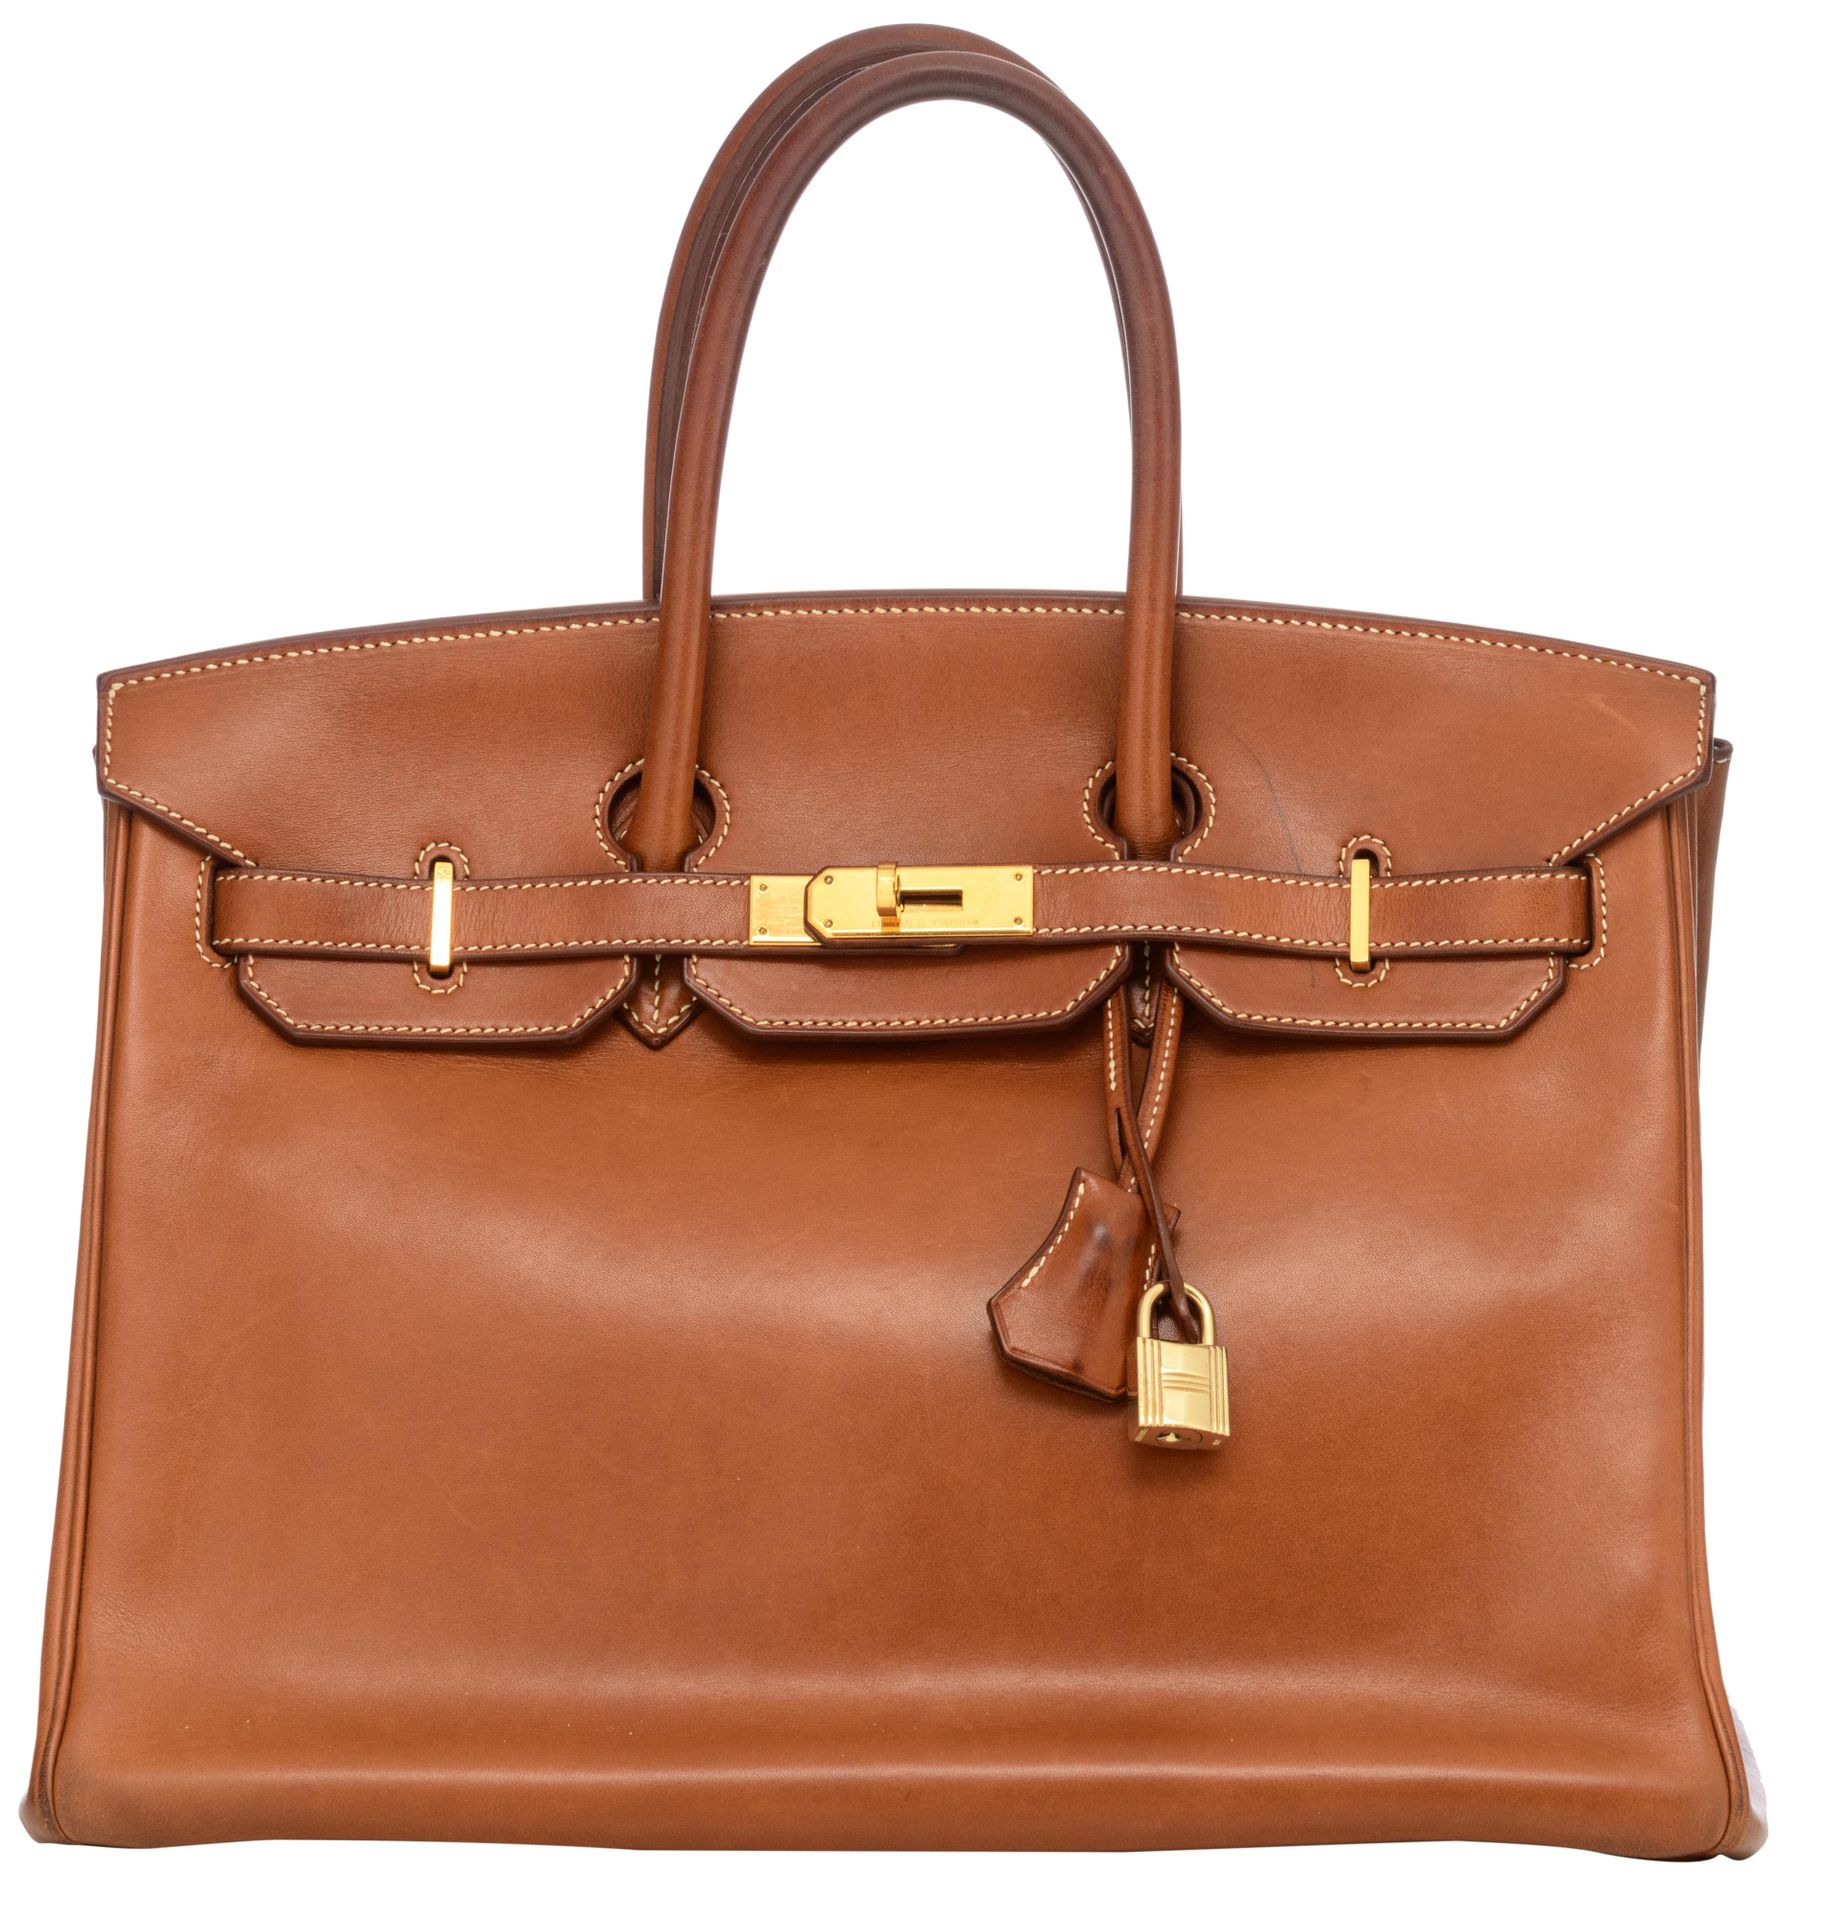 HERMeS, Birkin 35 bag, Gold Barenia calfskin leather, with gilt metal hardware 
&hellip;